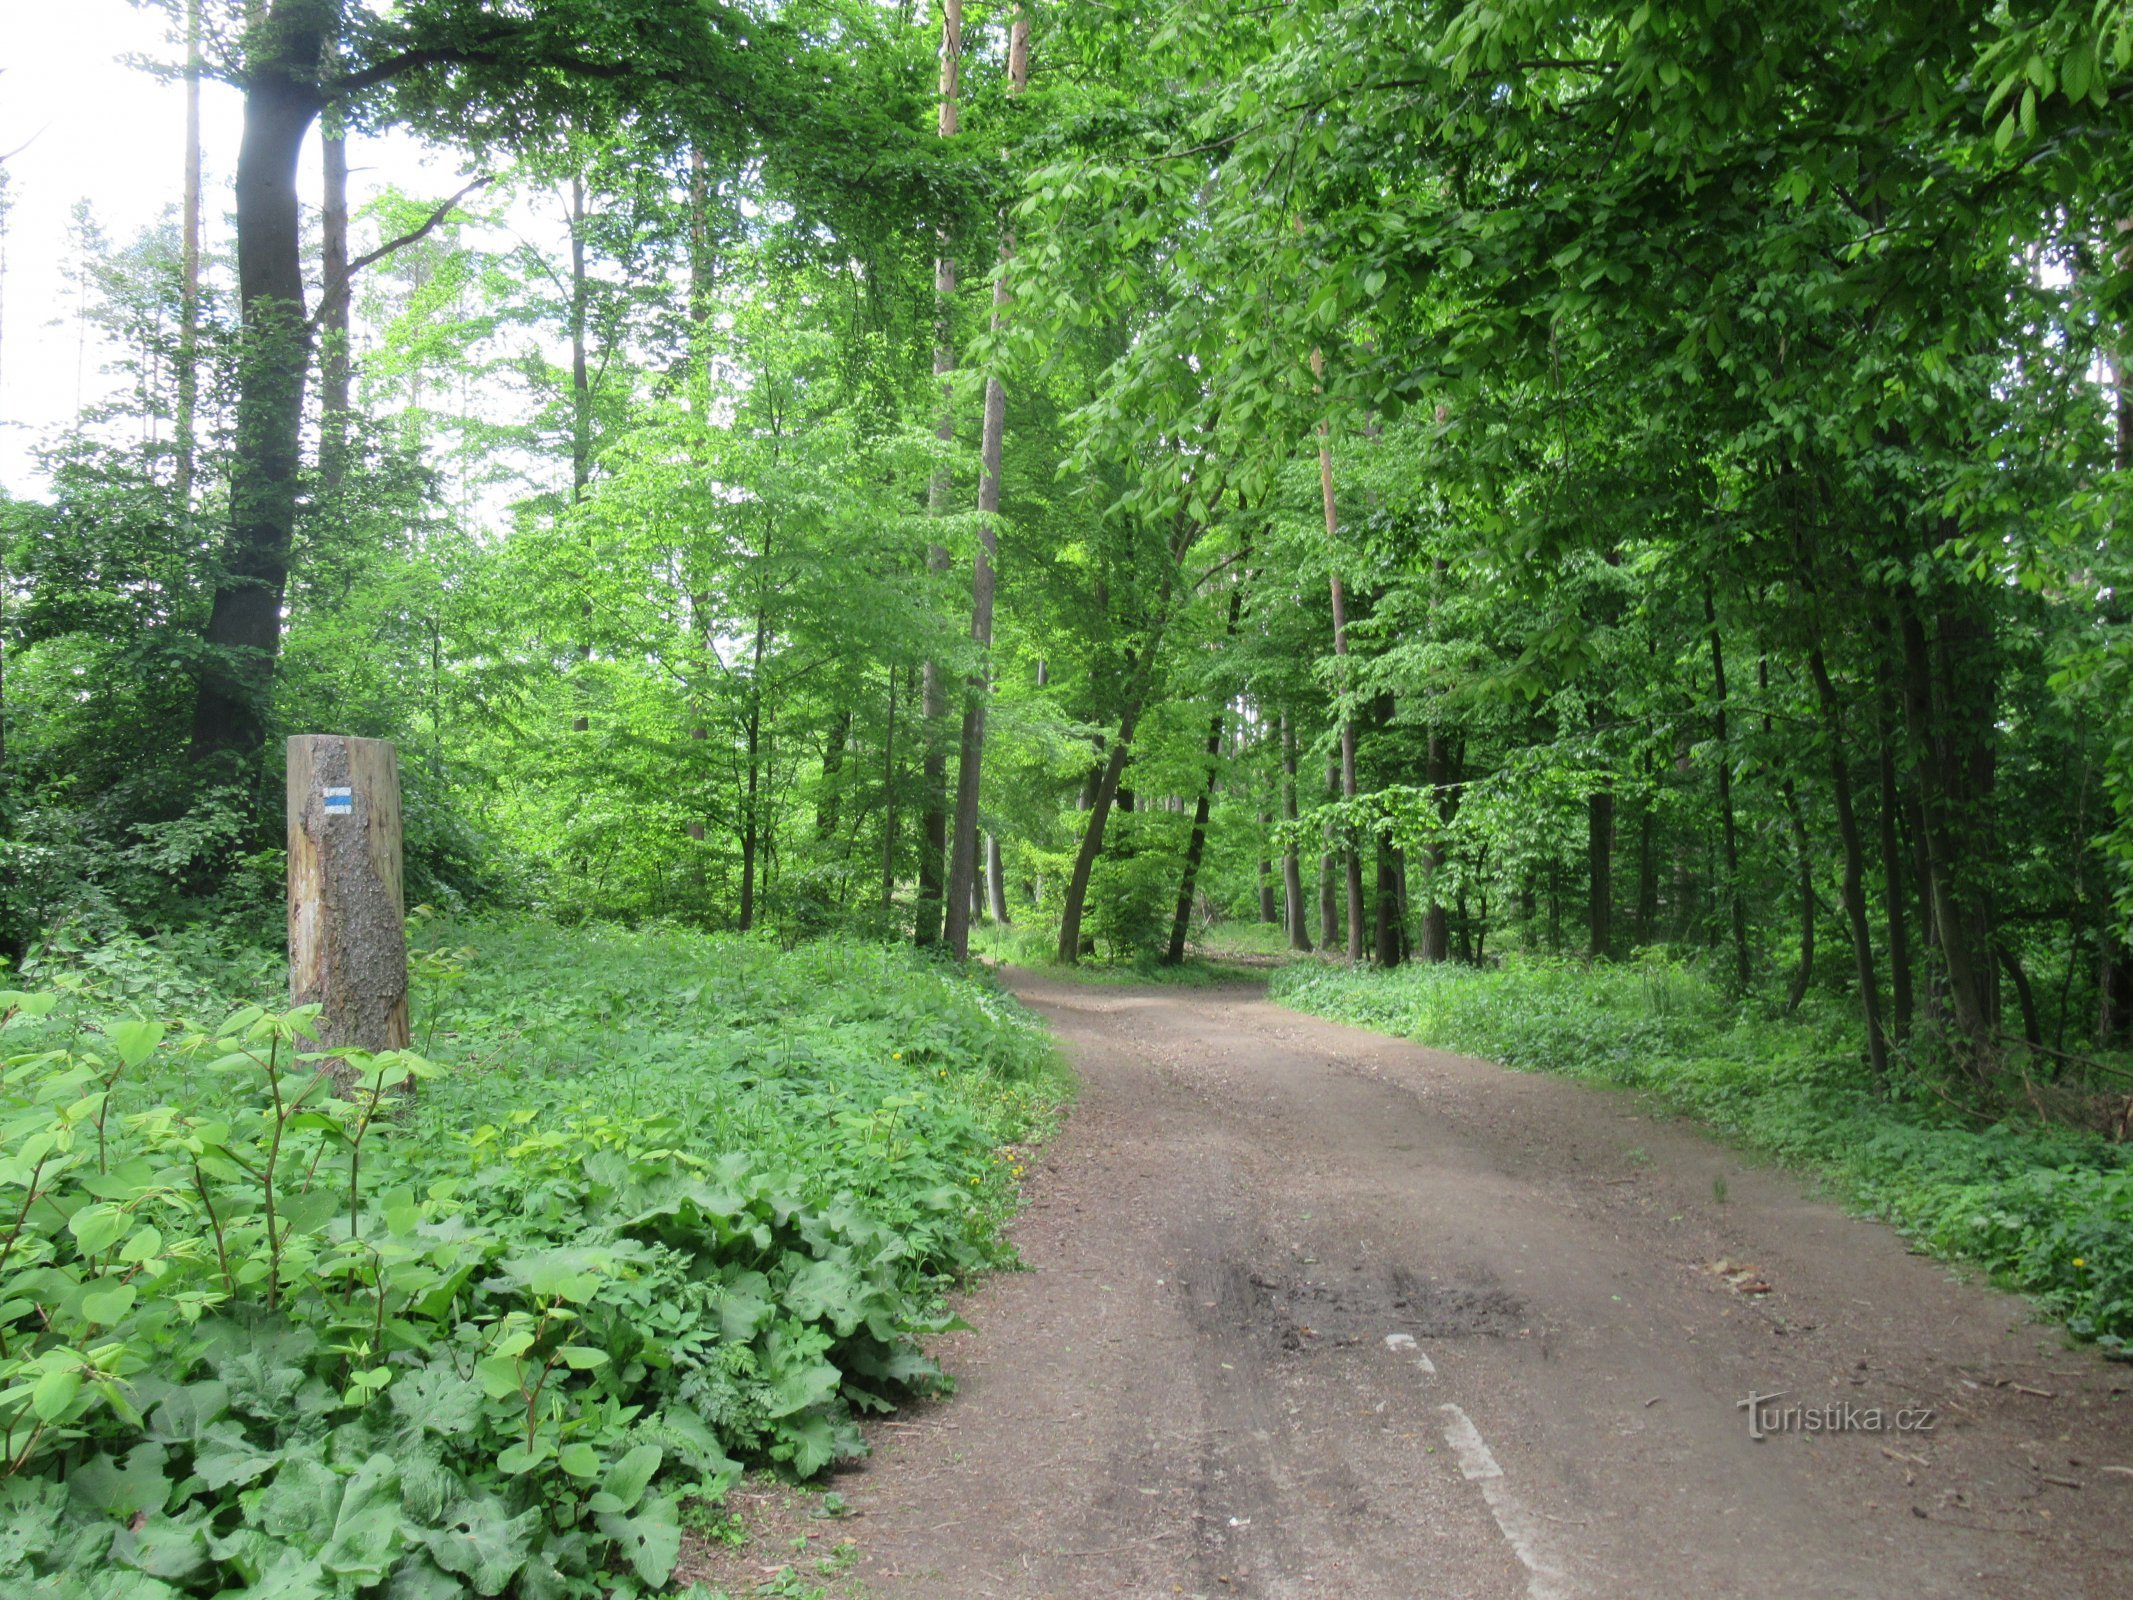 La ruta conduce principalmente a través de bosques caducifolios.